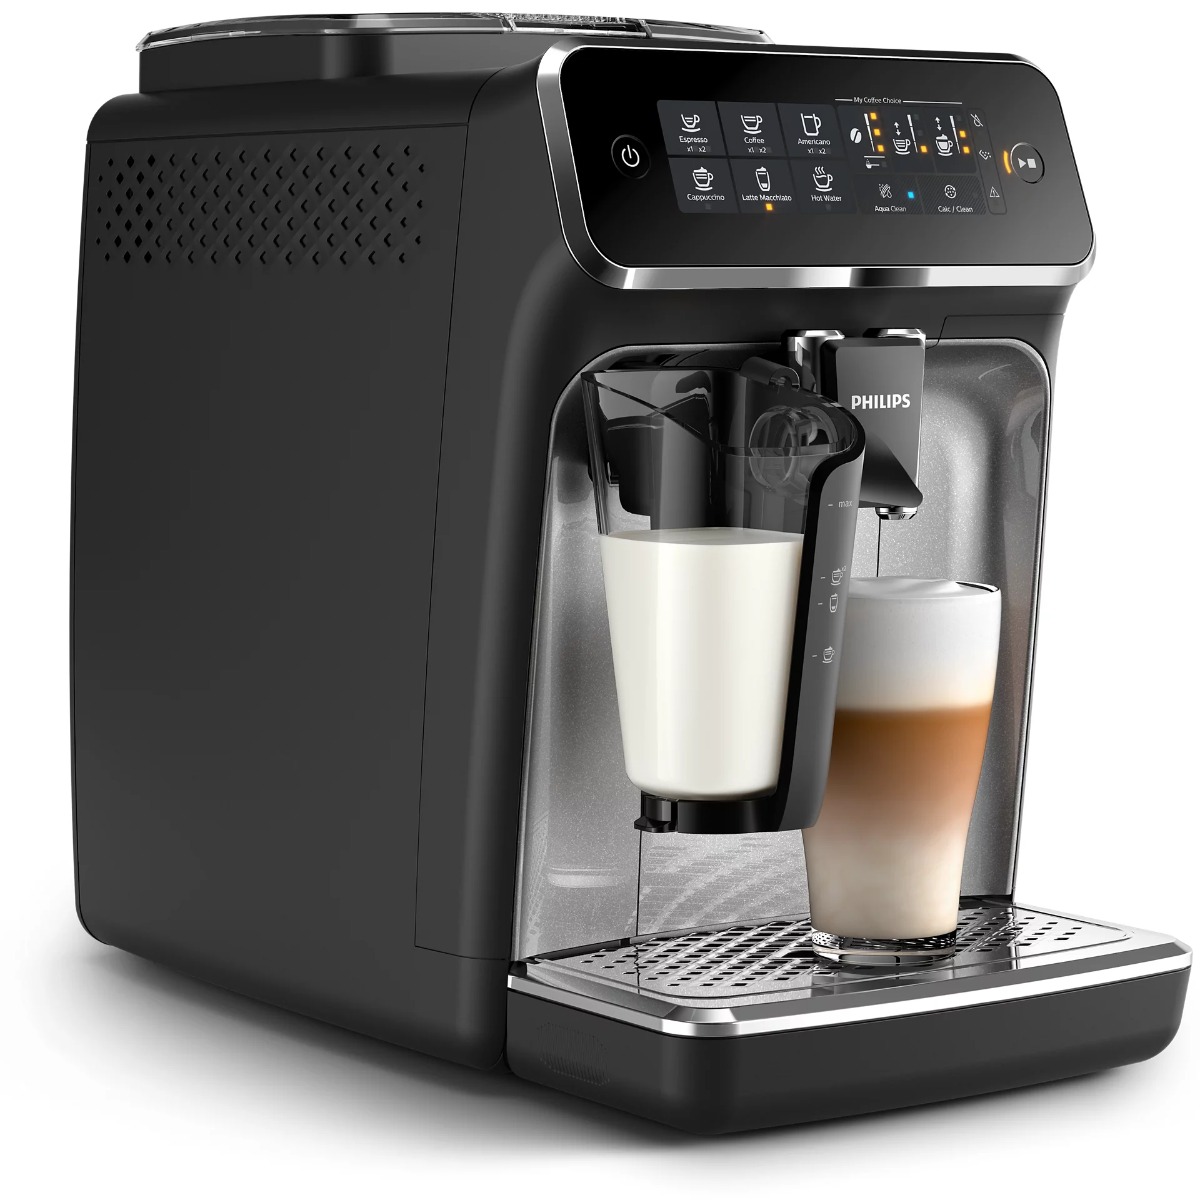 PHILIPS Coffee Maker 1500W, 1.80 liter, Black - EP3246/73